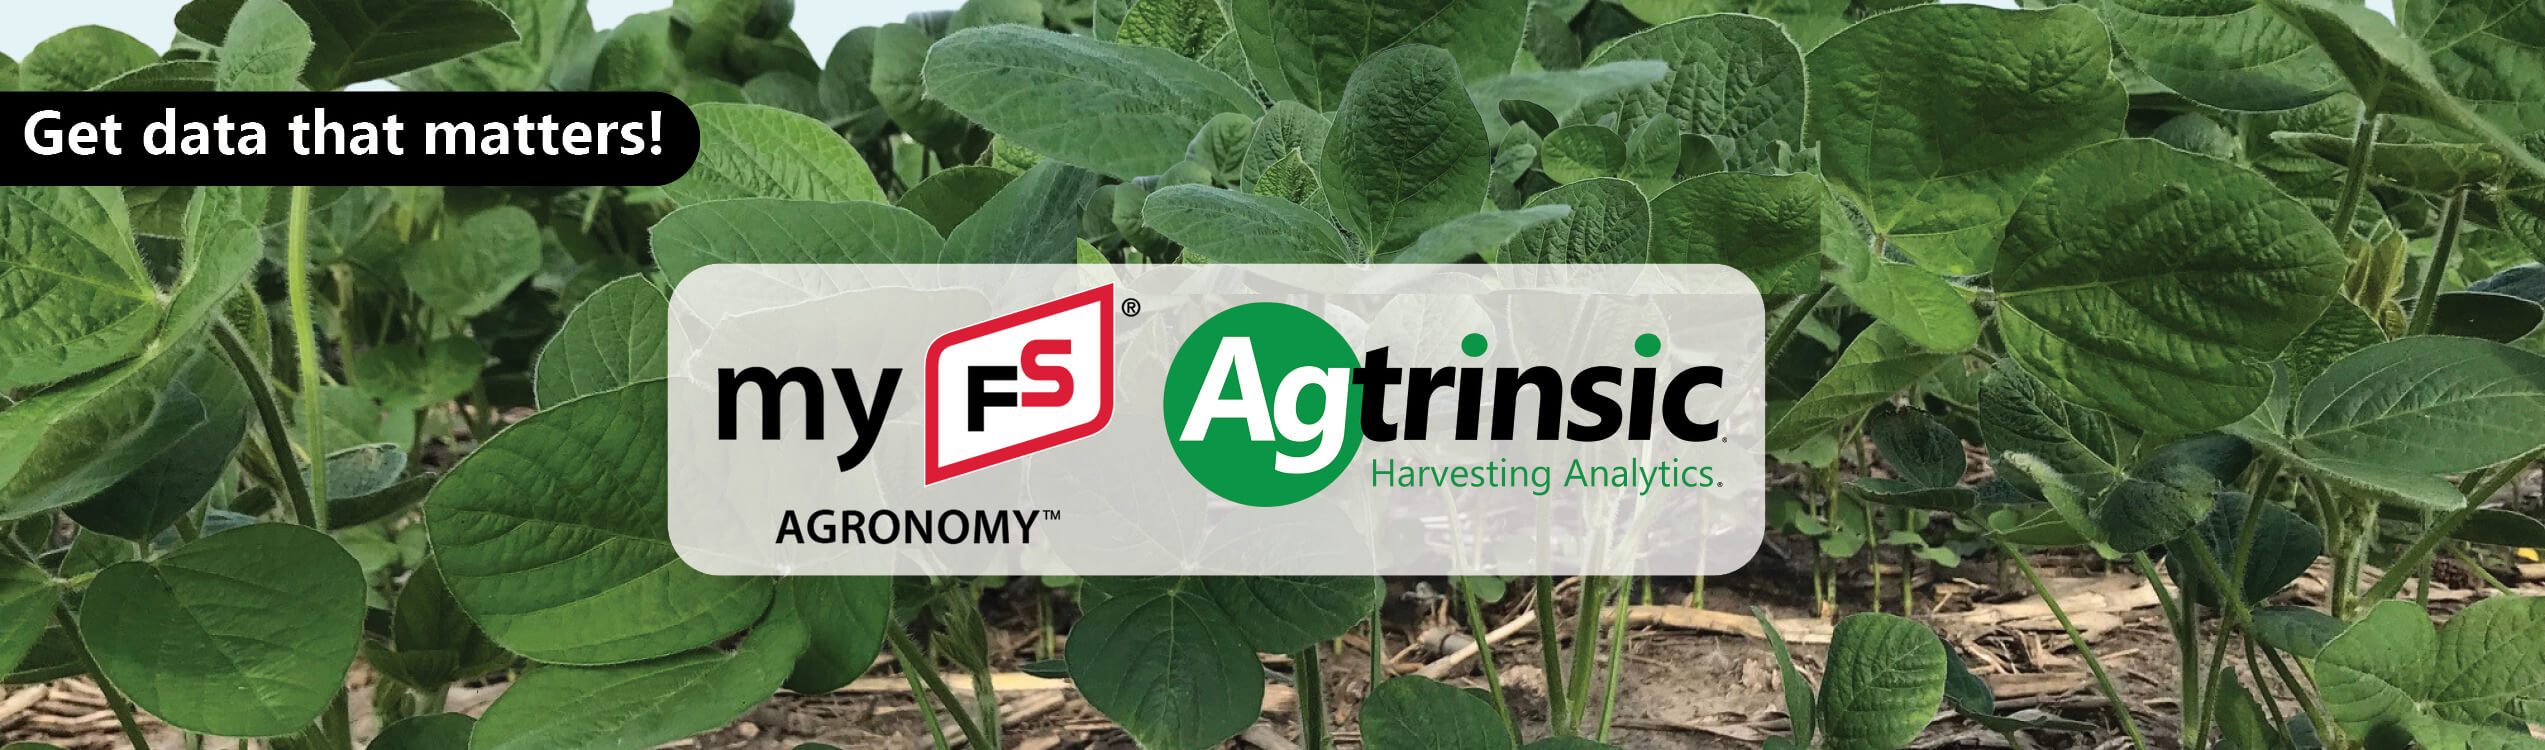 myFS-Agronomy-Agtrinsic